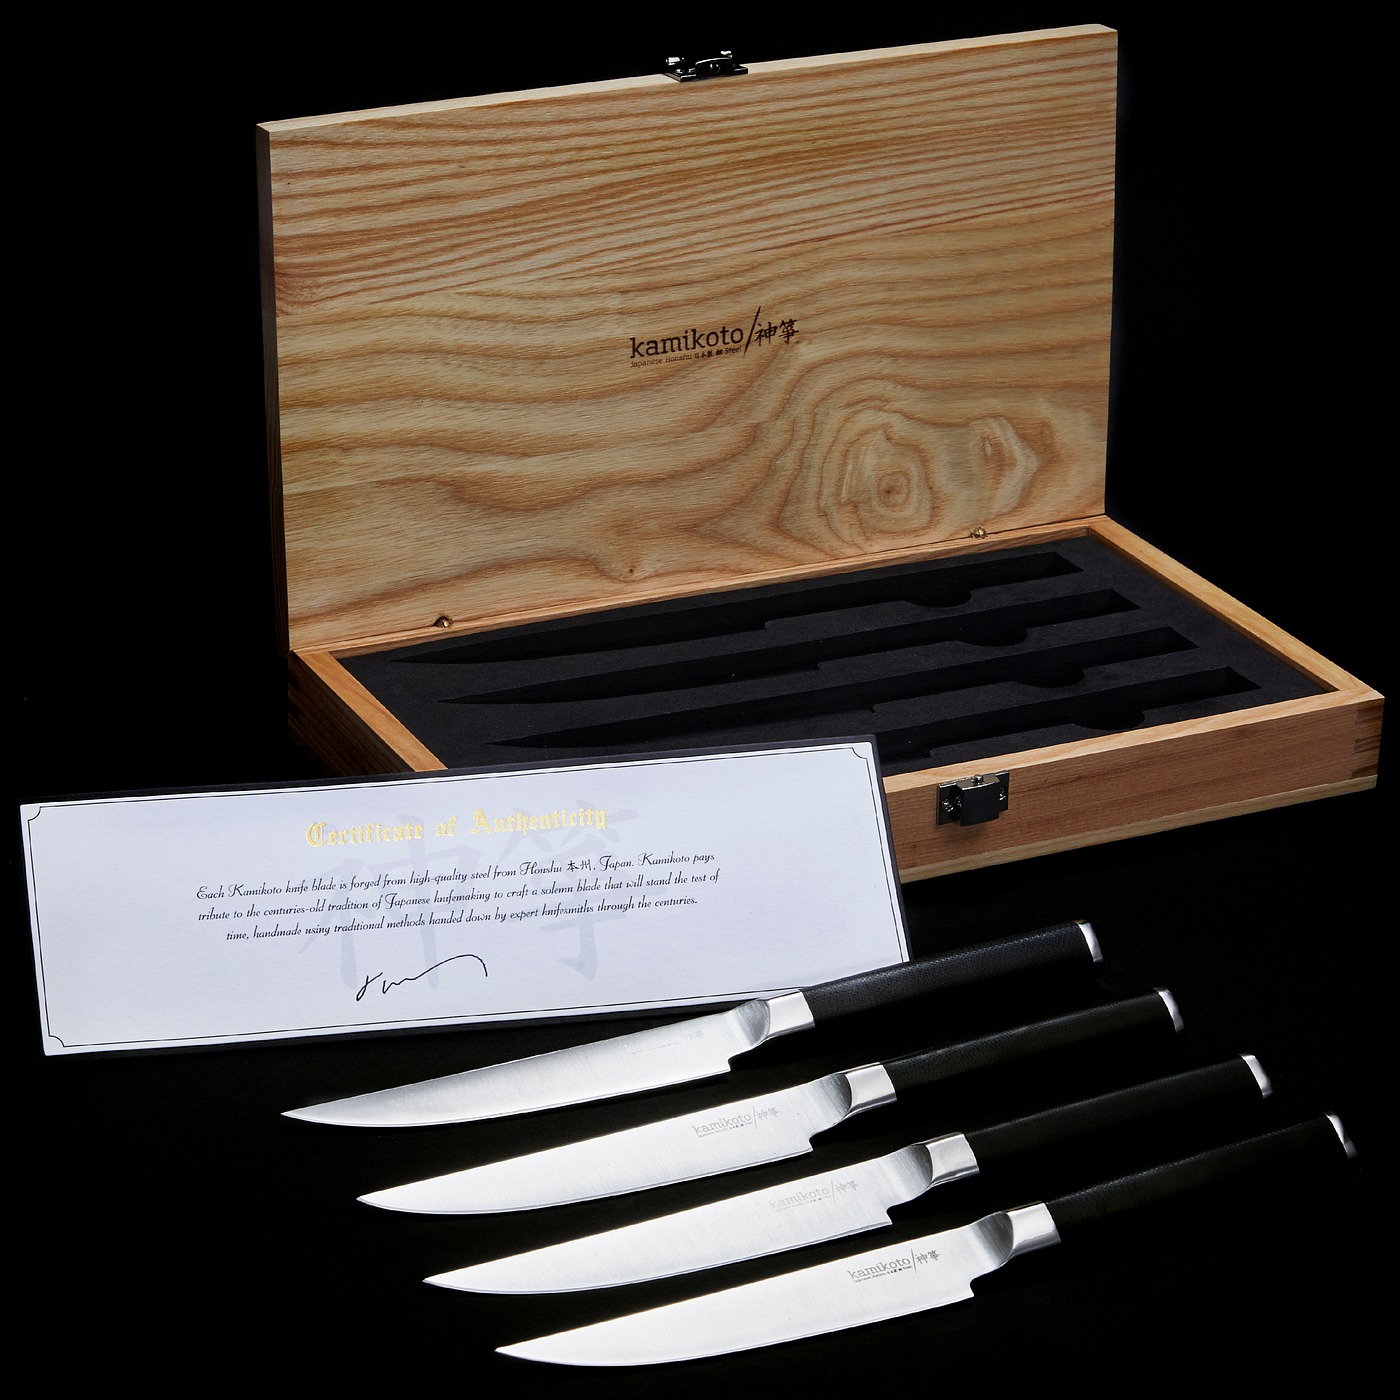 Kanpeki Knife Set & Kuro Series Knife Set